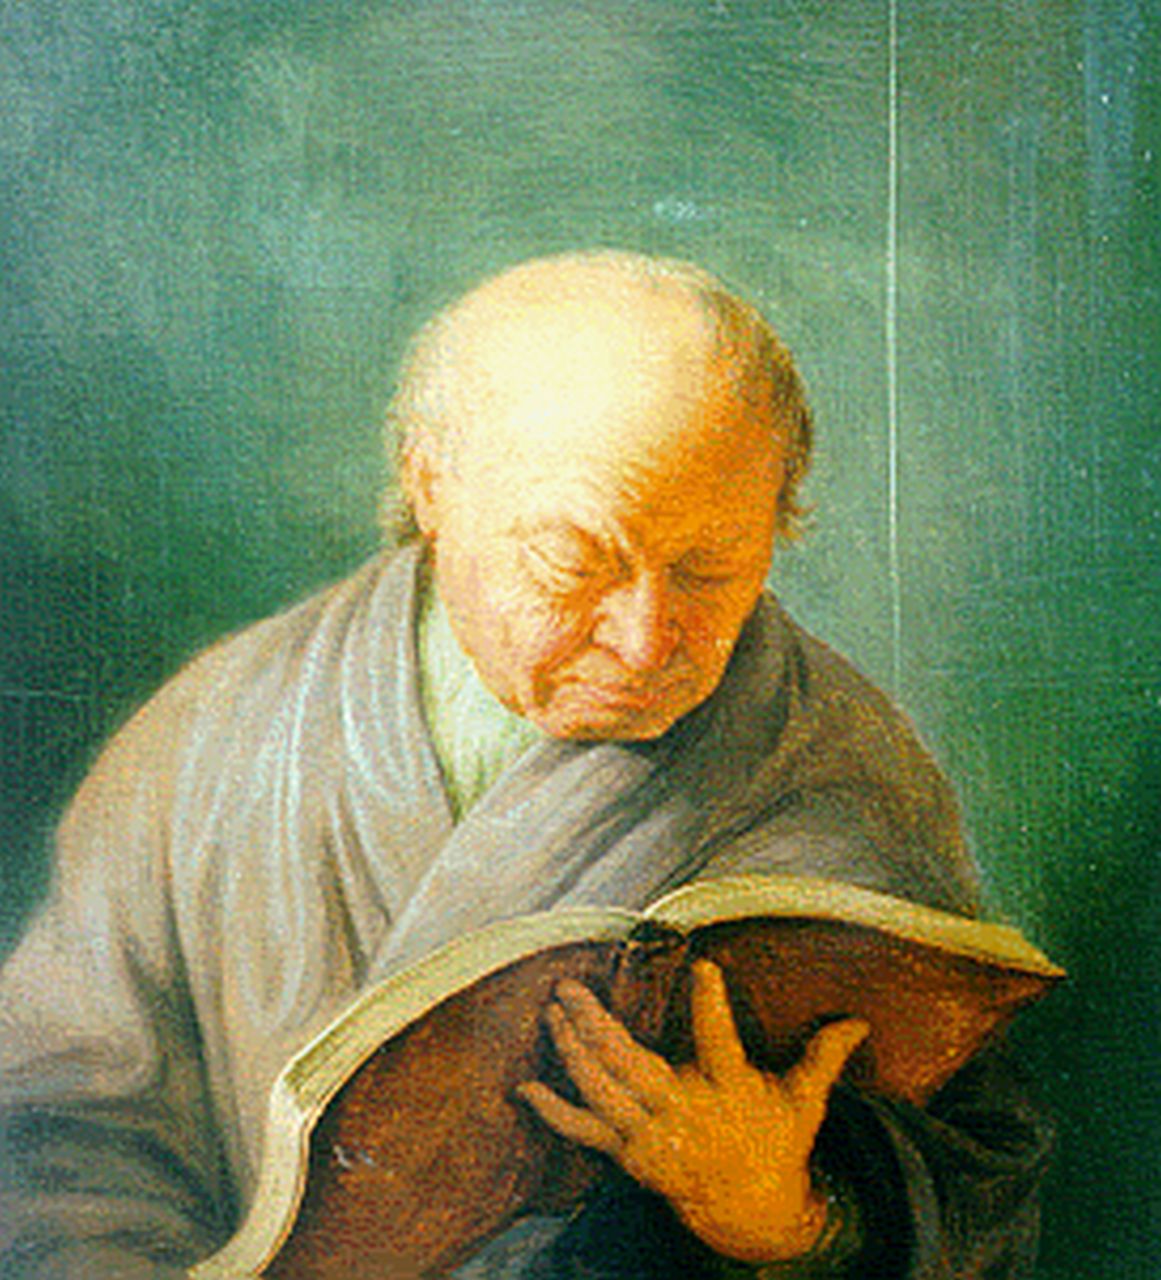 Mieris de Jonge F. van | Frans van Mieris de Jonge, Elderly man with a book, Öl auf Holz 18,2 x 16,8 cm, signed on the reverse und dated 1740